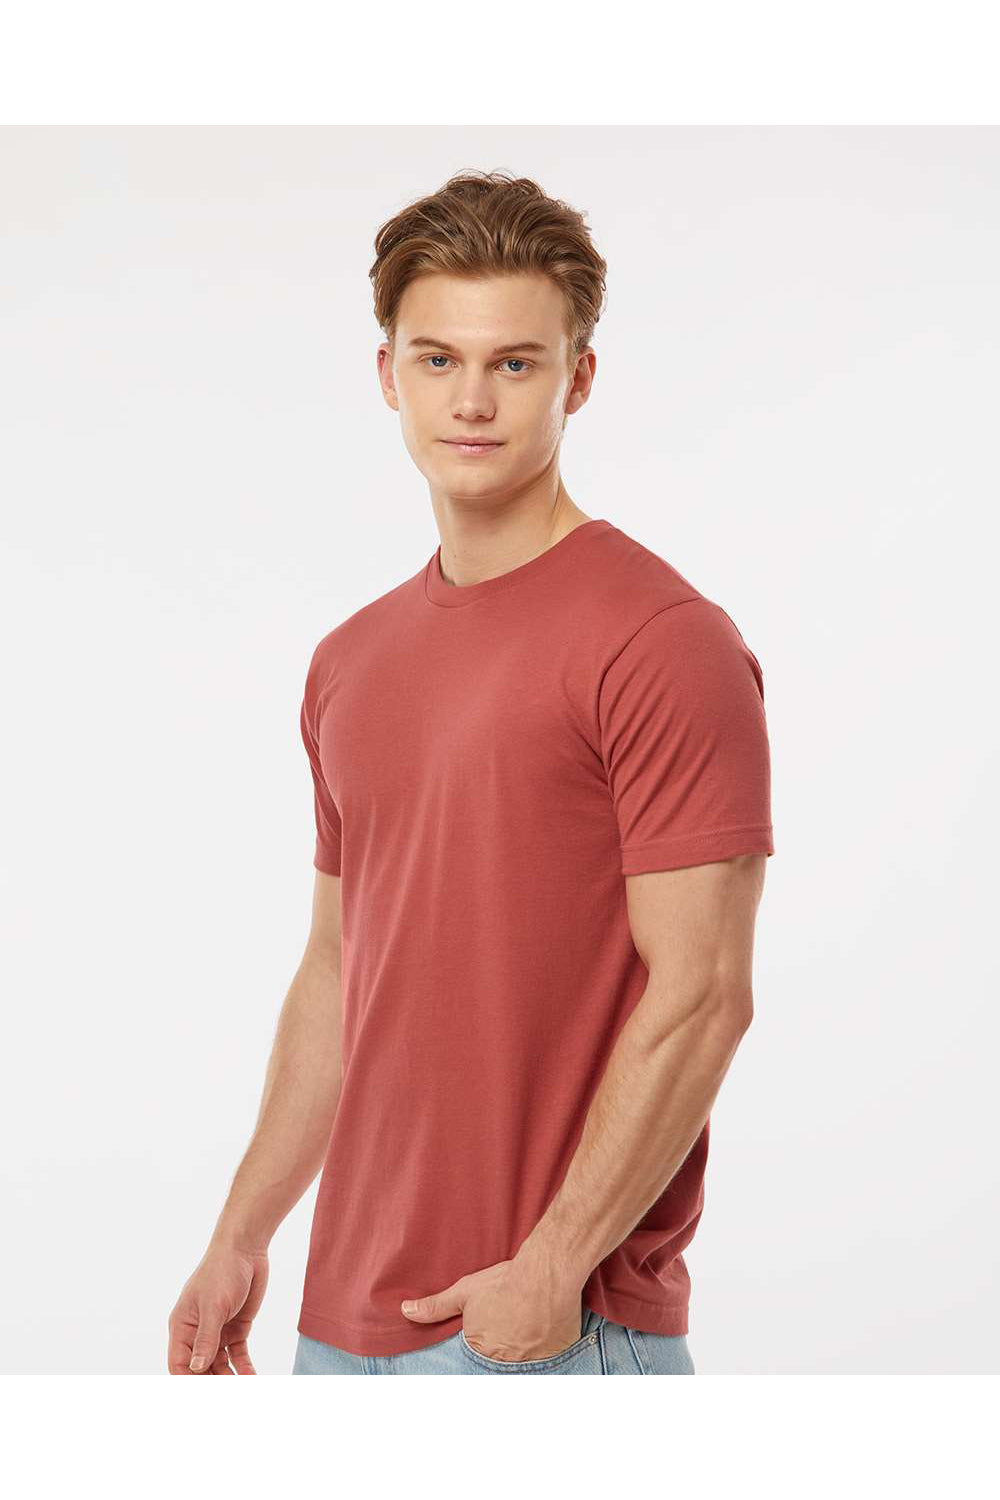 Tultex 202 Mens Fine Jersey Short Sleeve Crewneck T-Shirt Terracotta Red Model Side